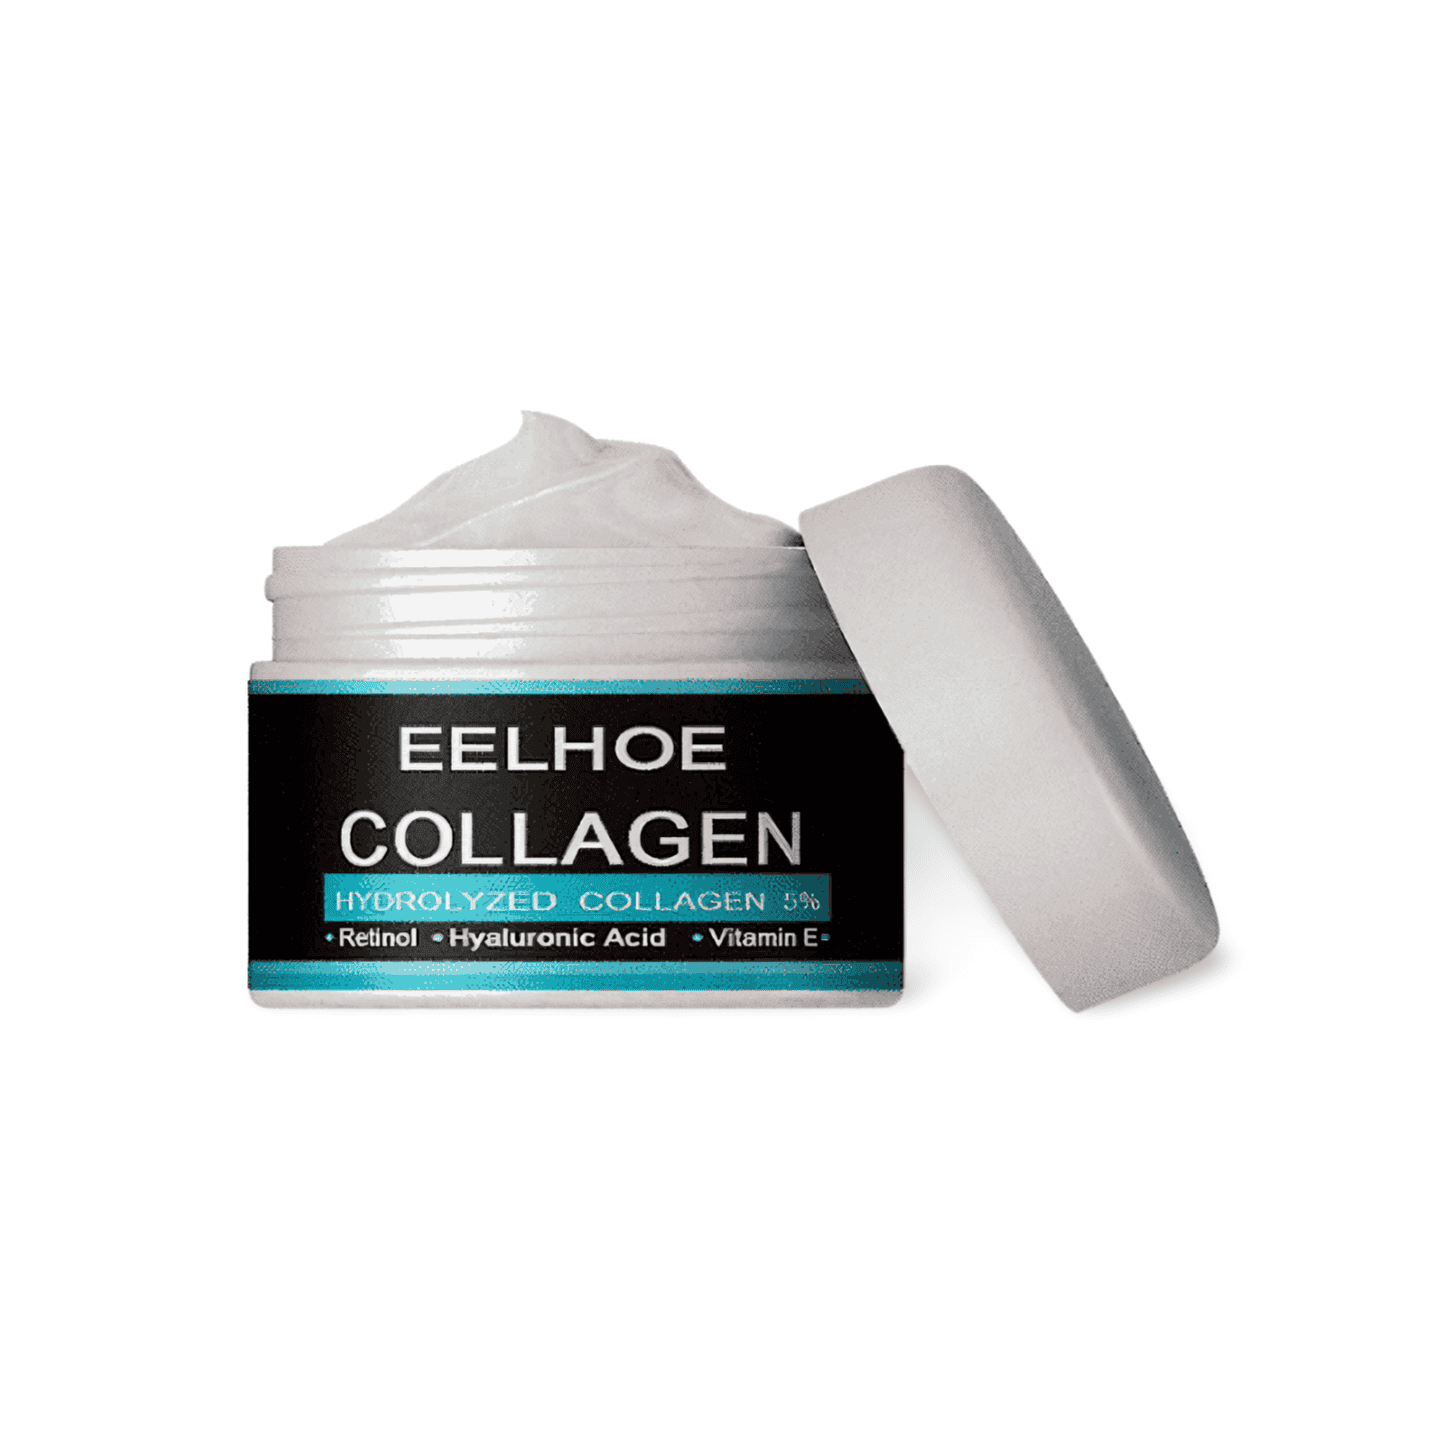 Eelhoe Collagen Face Cream ( Men's Anti Age Wrinkle Cream )